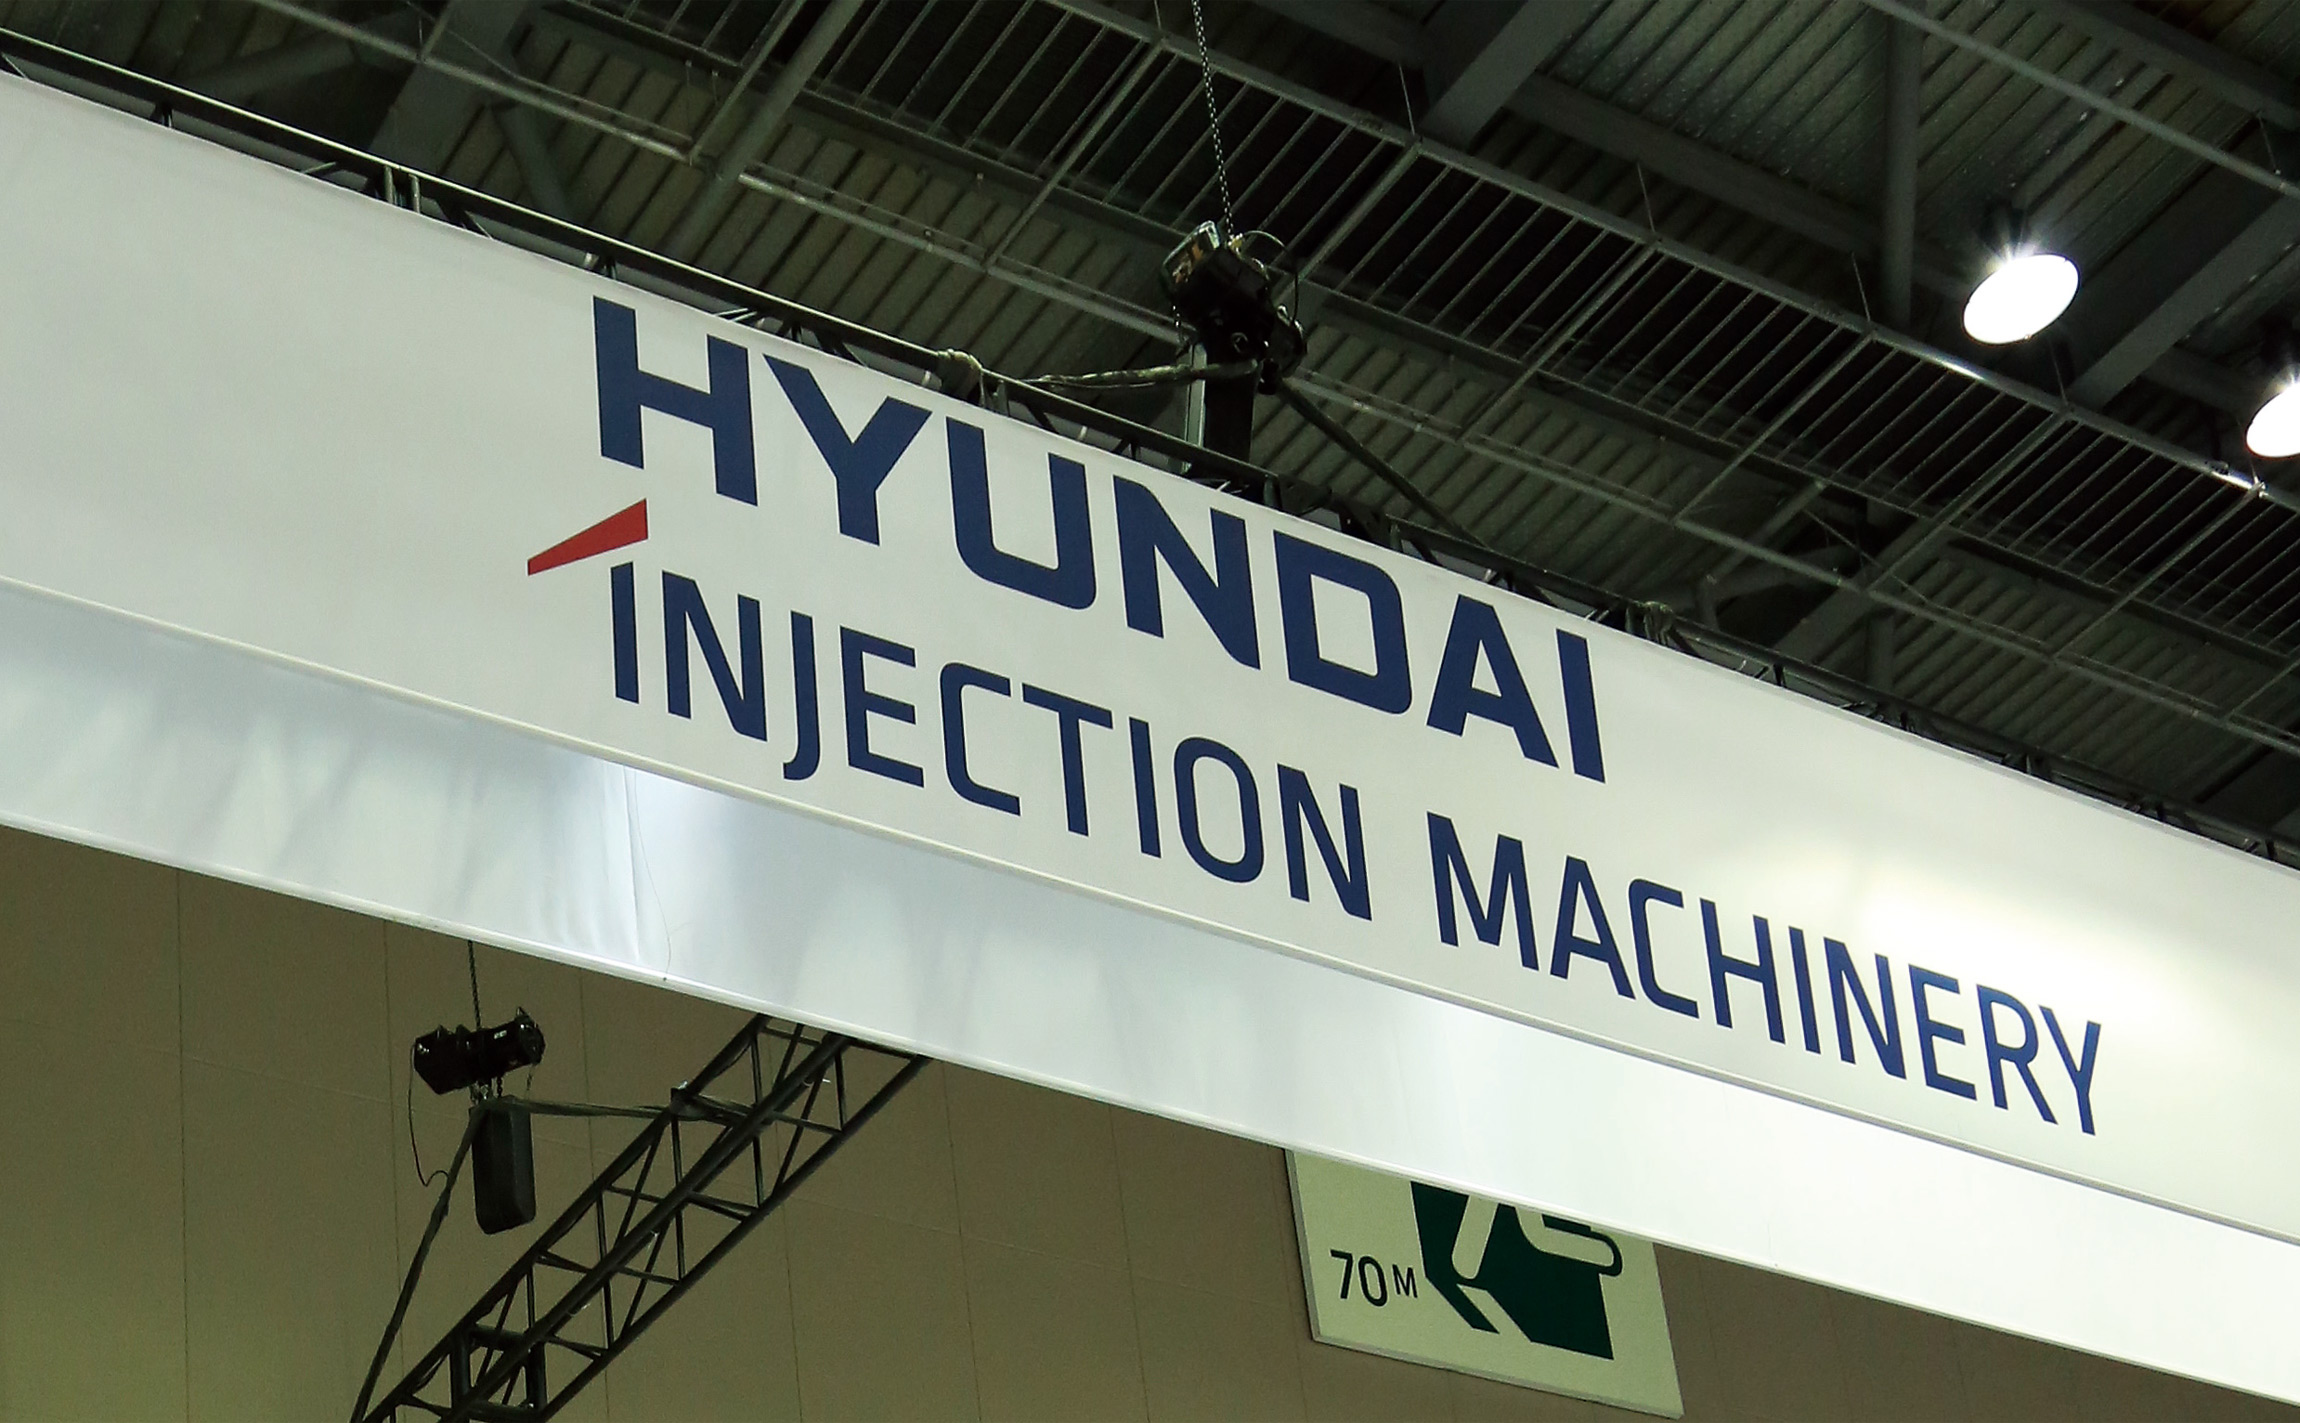 Injection Machine Hyundai Injection Machinery Packaging & Product hdim-machine-id-1.jpg